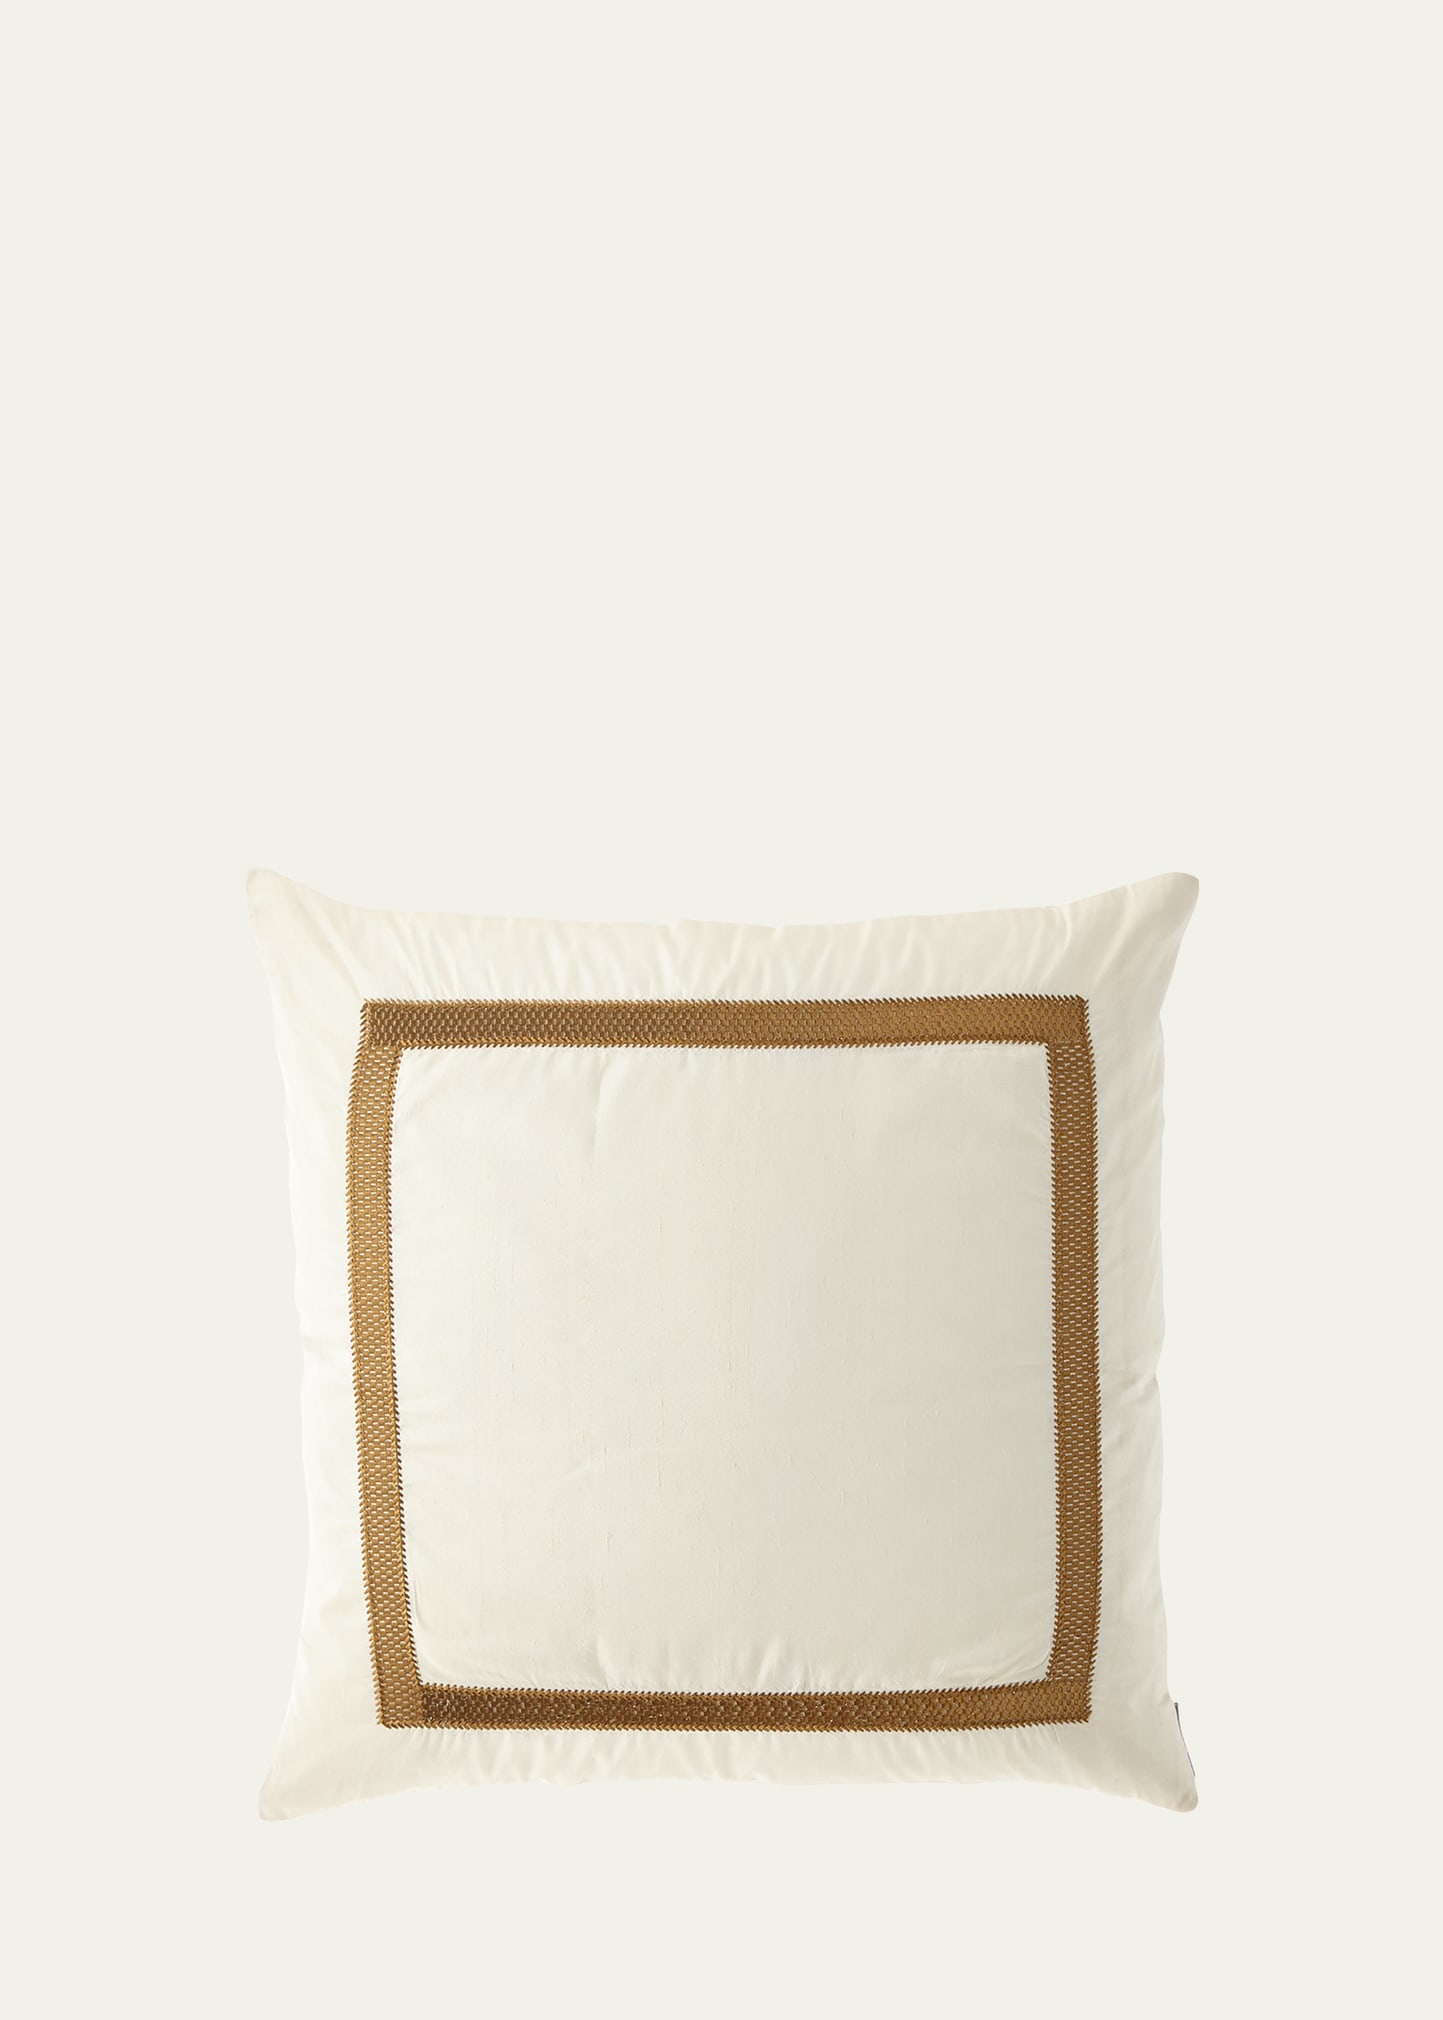 Lili Alessandra Caesar Decorative Pillow, 24"sq. In Ivory